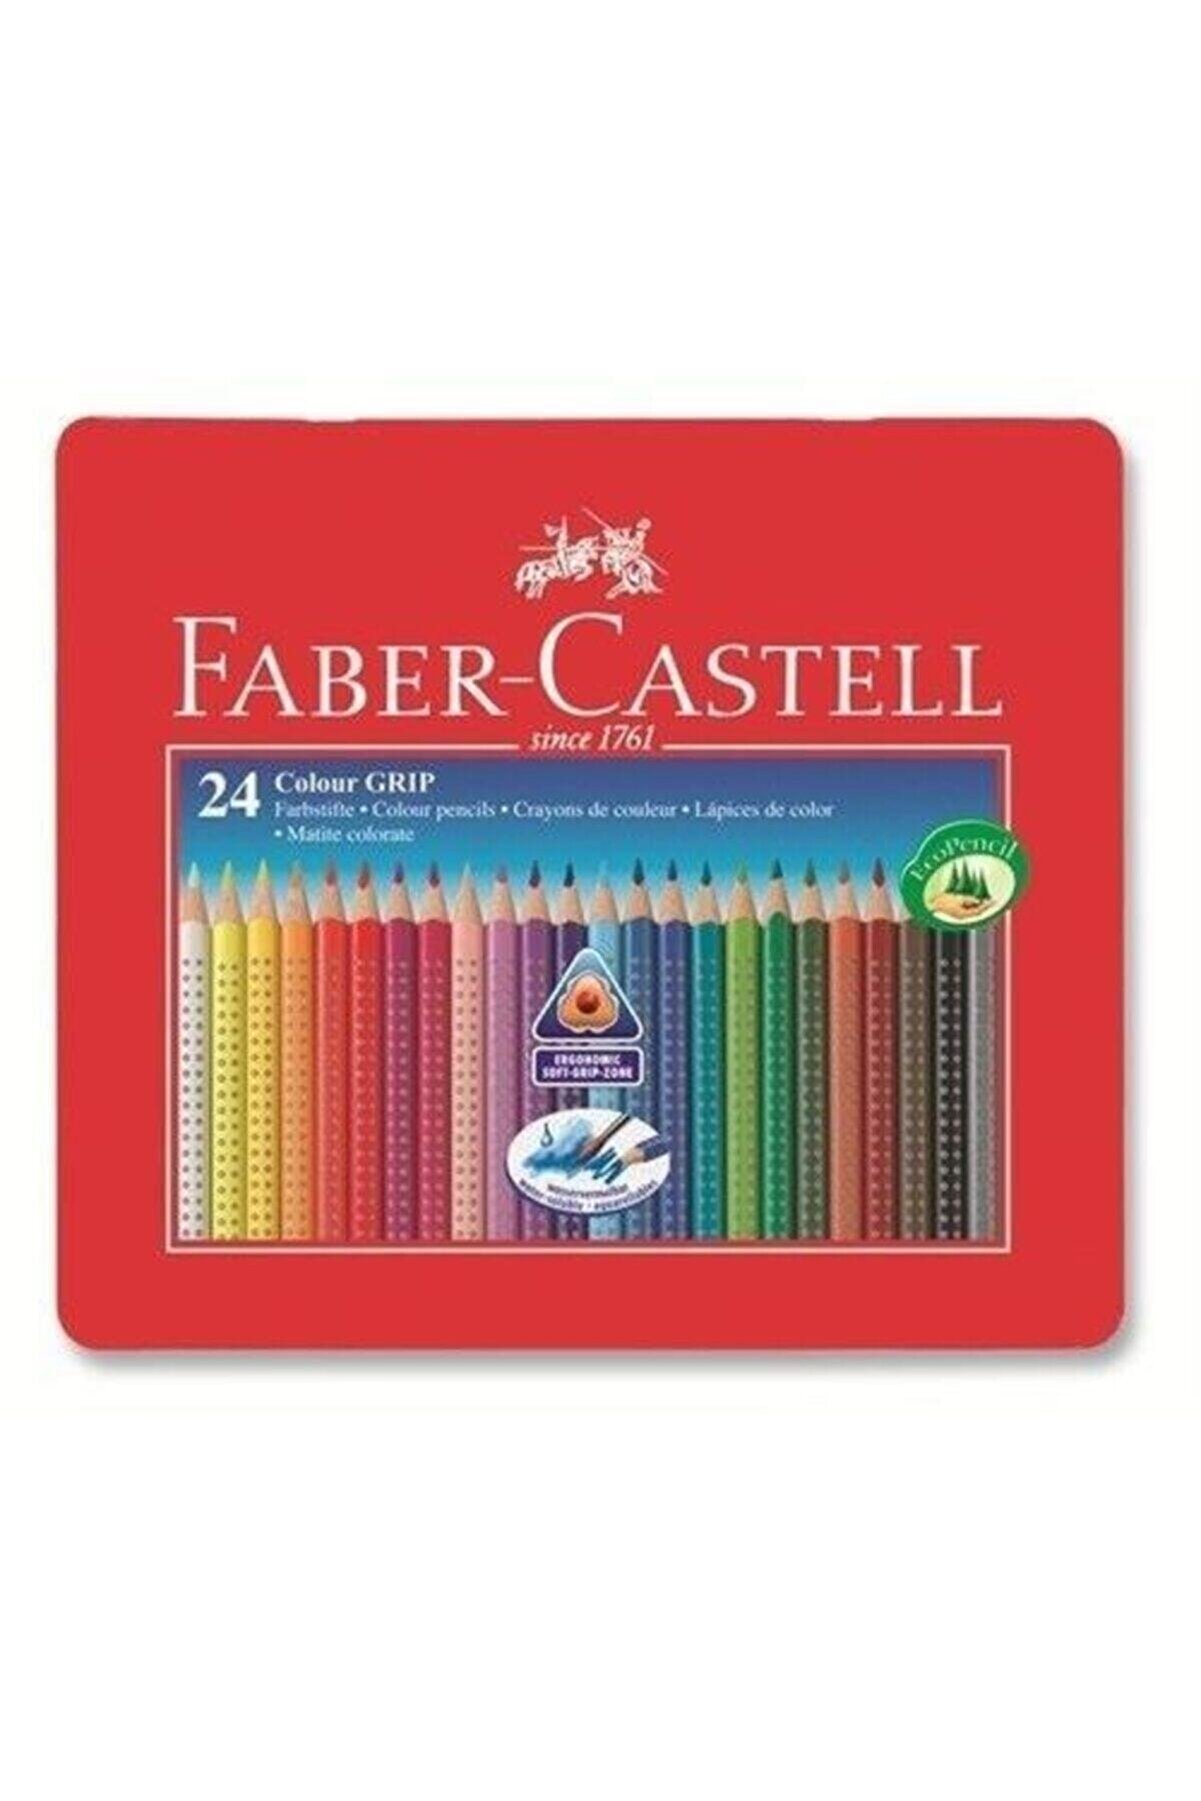 Faber Castell Faber-castell Grip Boya Kalemi 24 Renk Metal Kutu 2001